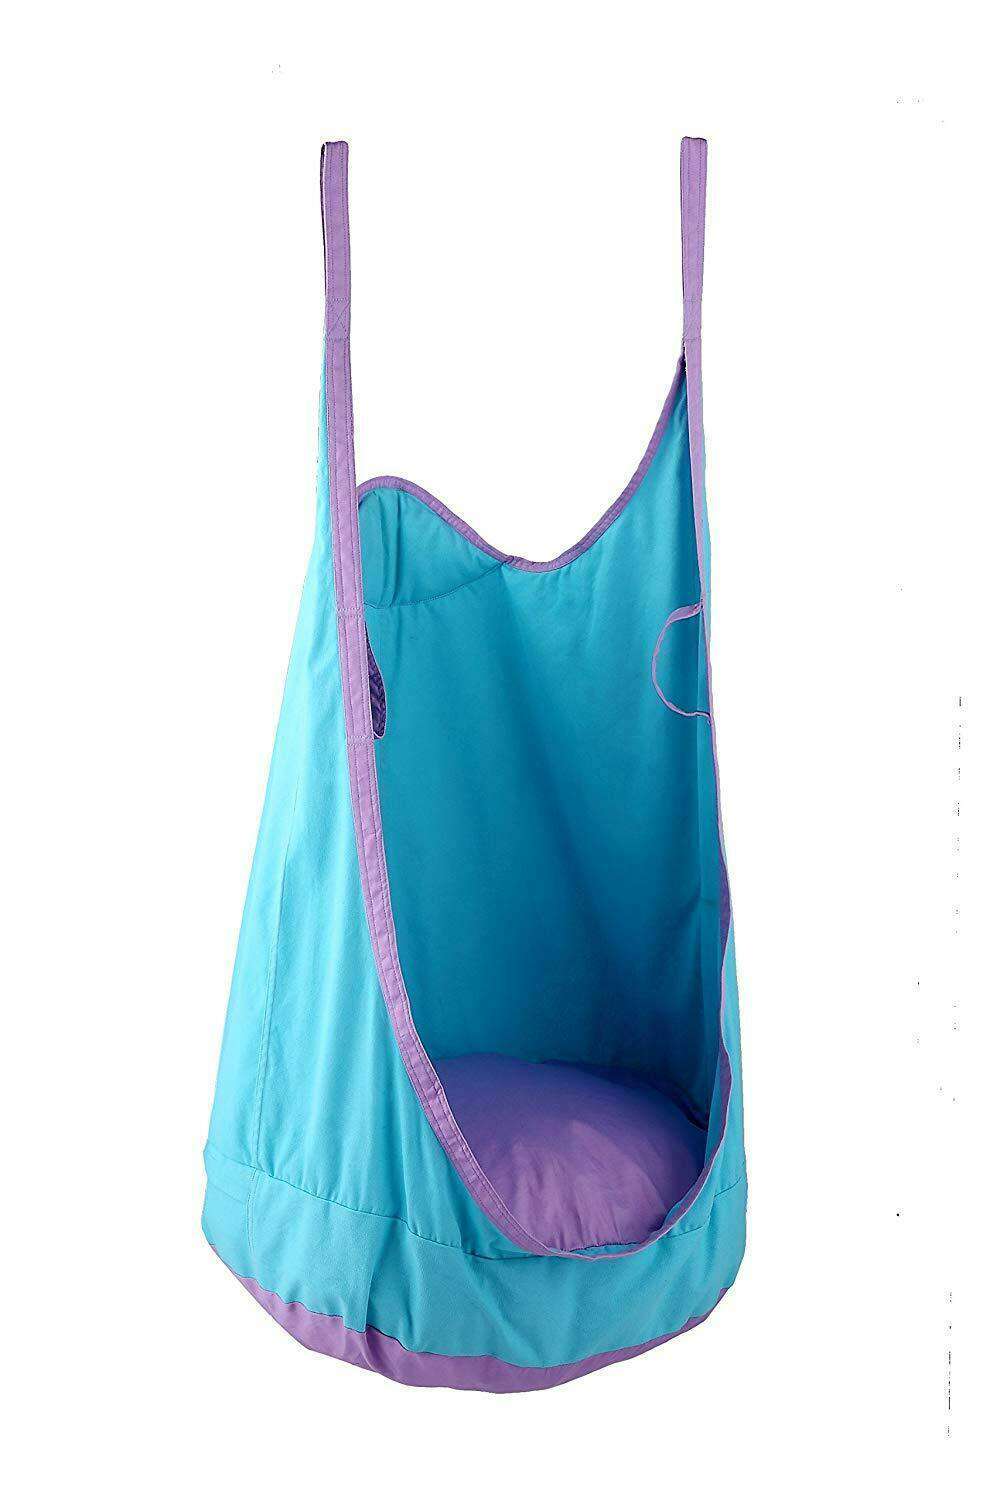 large-kids-swing-hammock-pod-chair-rope-hanging-seat-nest-indoor-outdoor